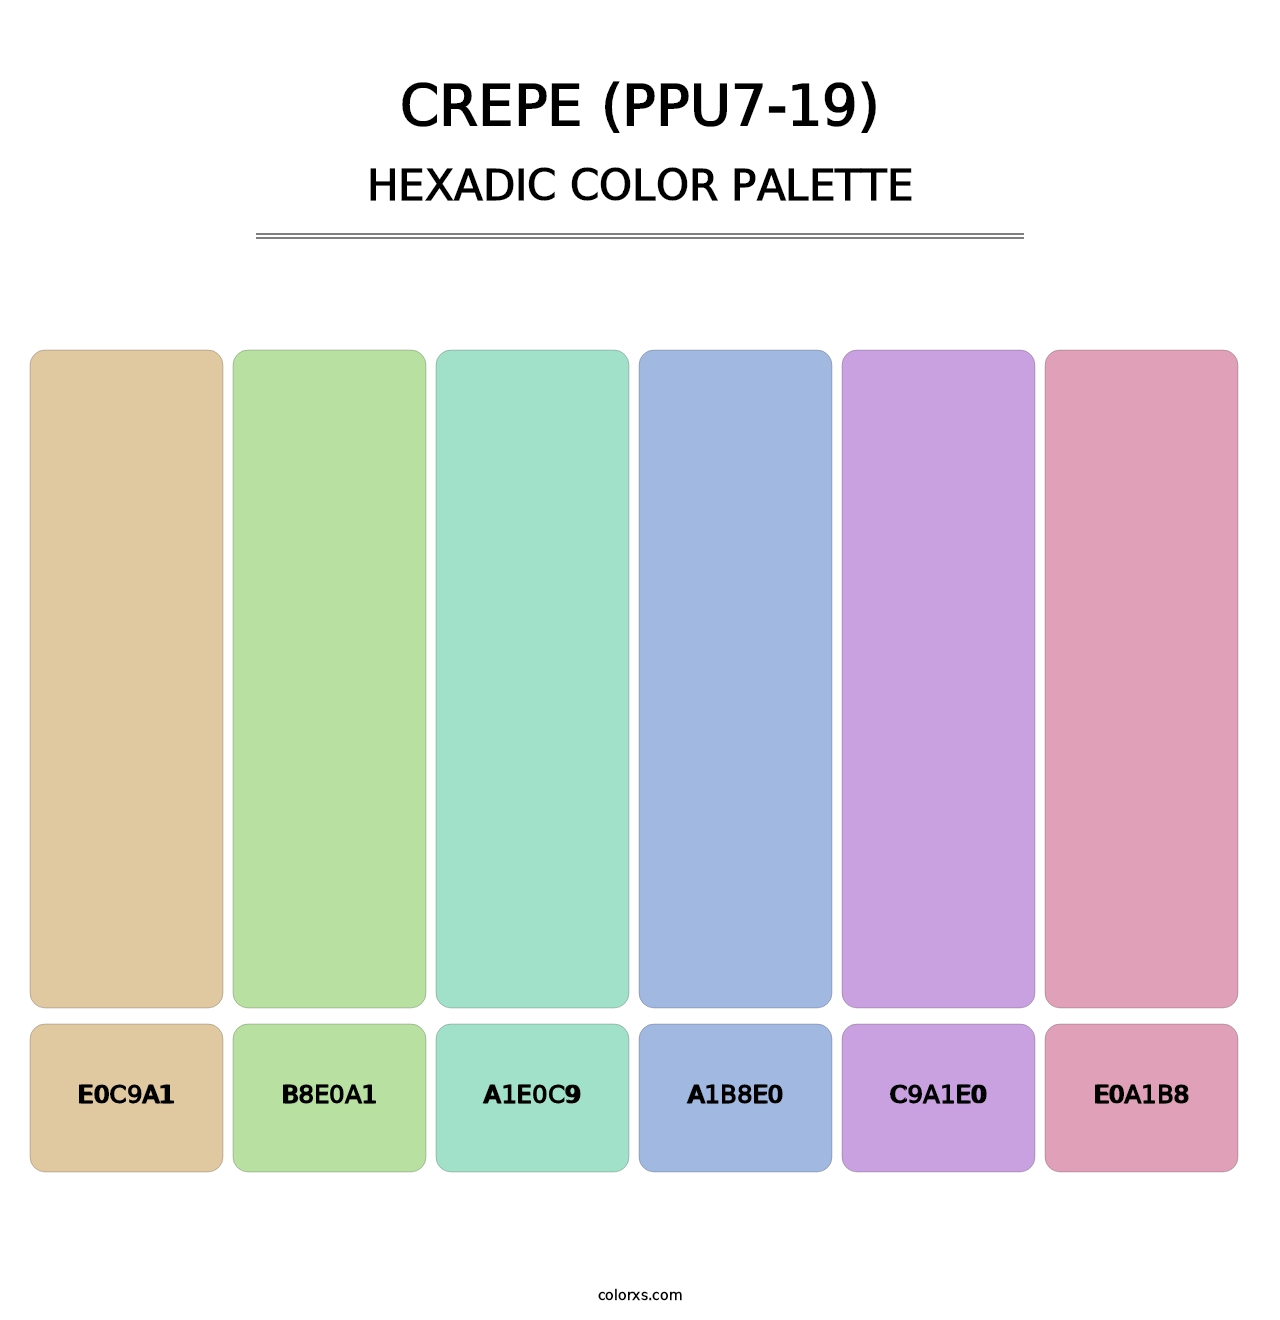 Crepe (PPU7-19) - Hexadic Color Palette